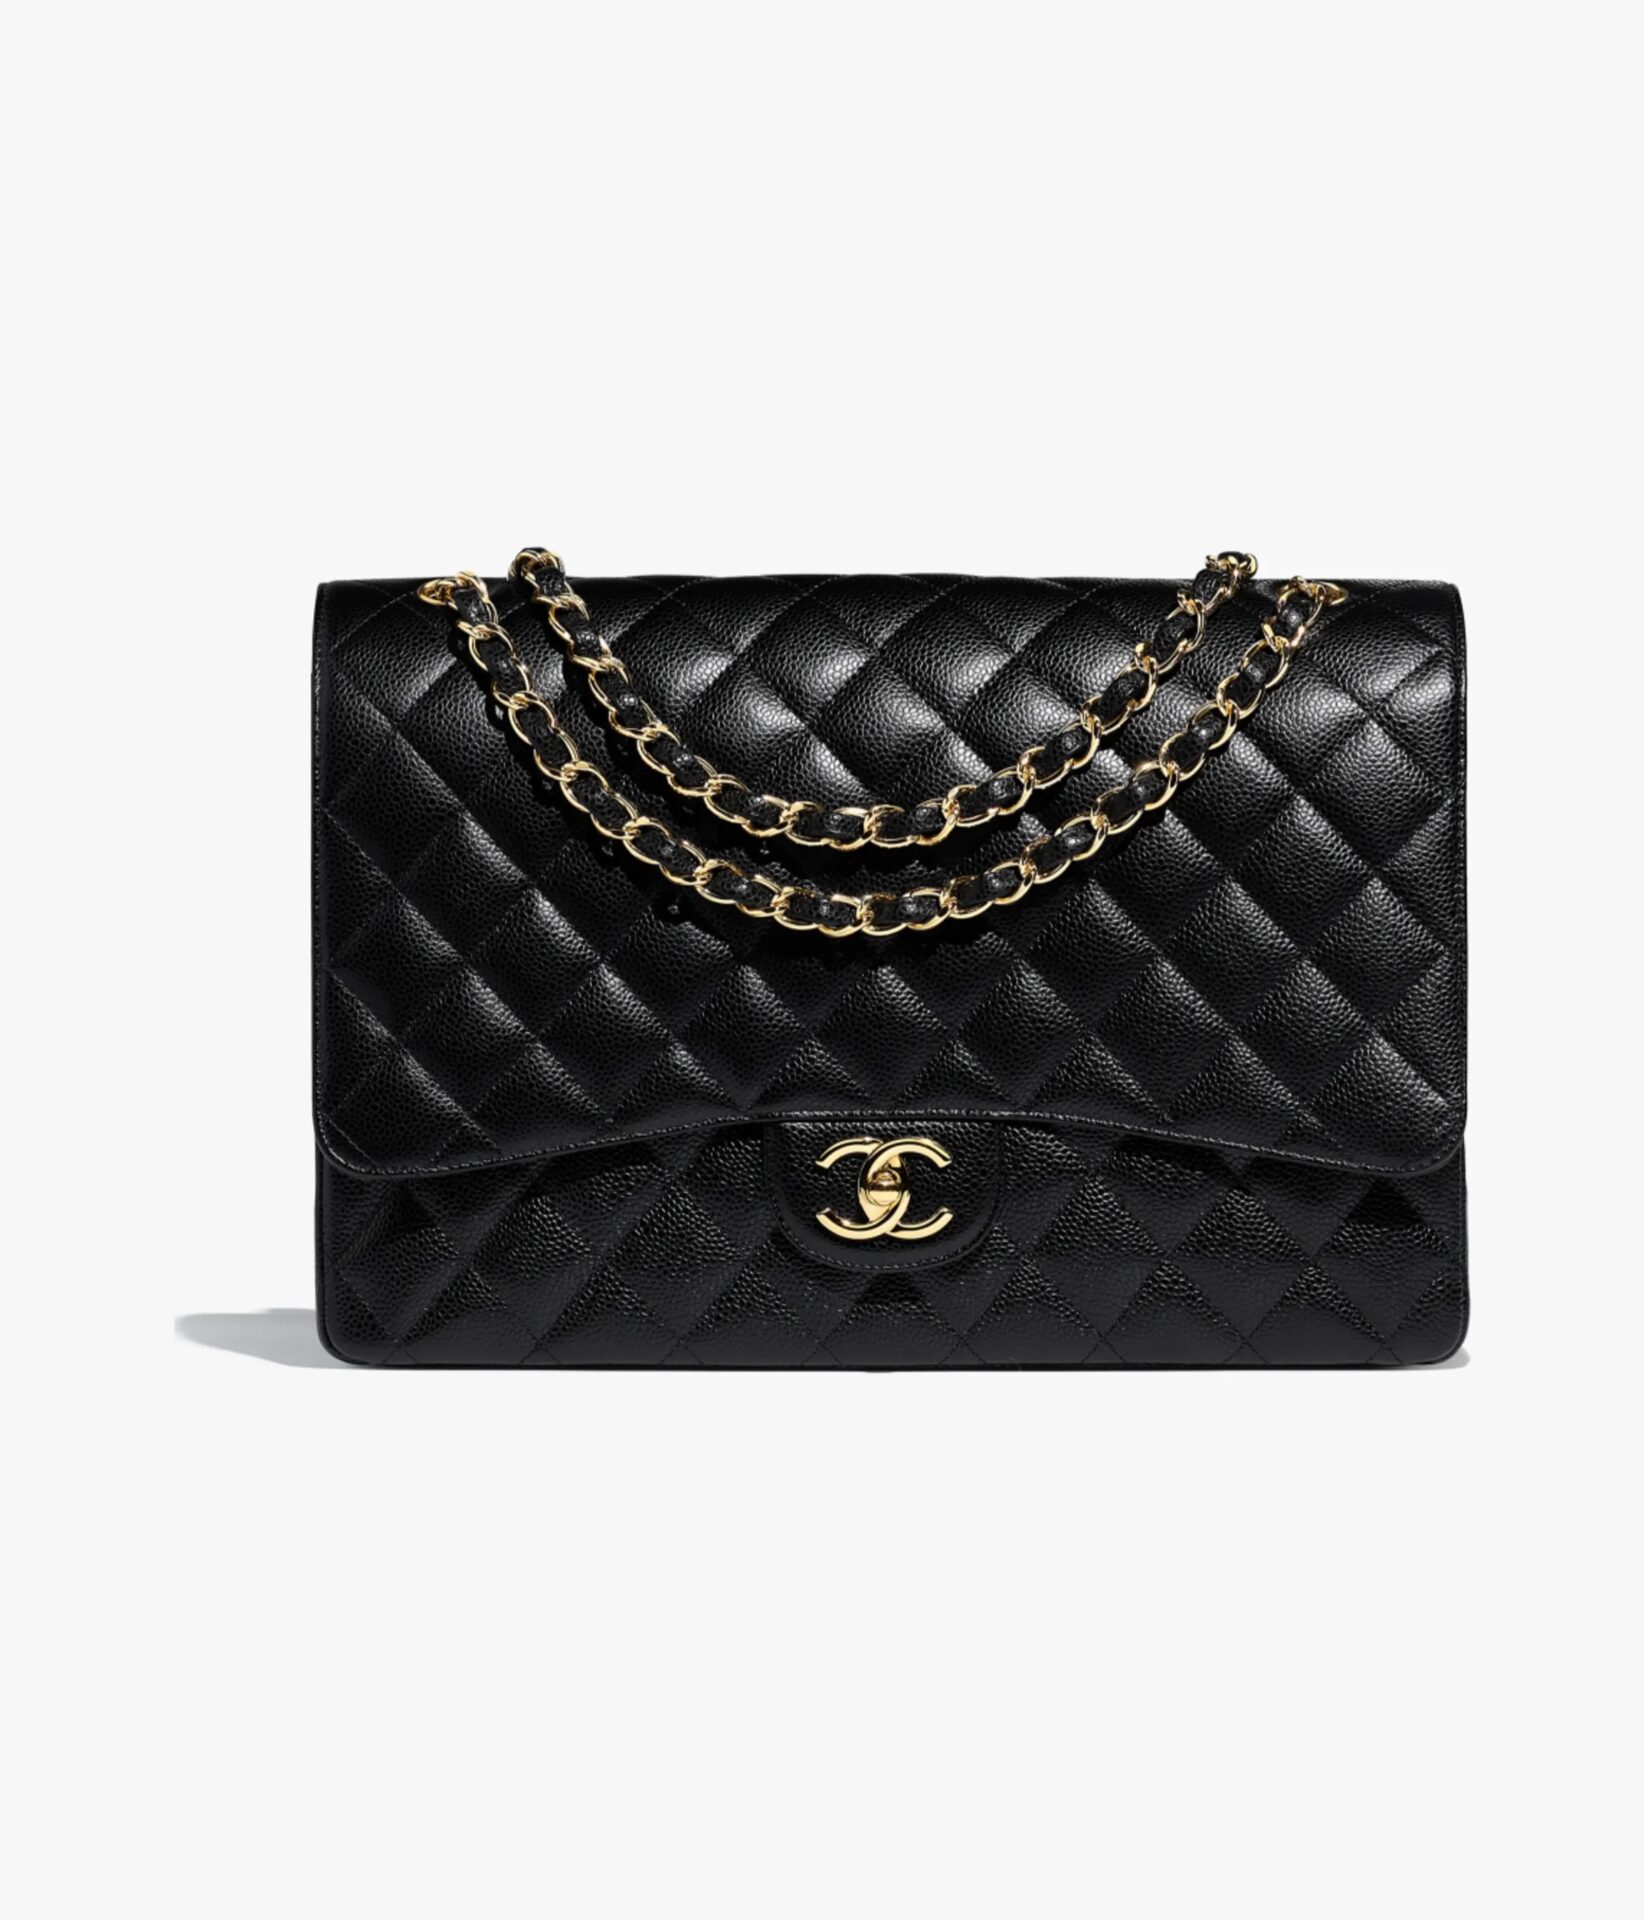 Le sac Timeless de Chanel